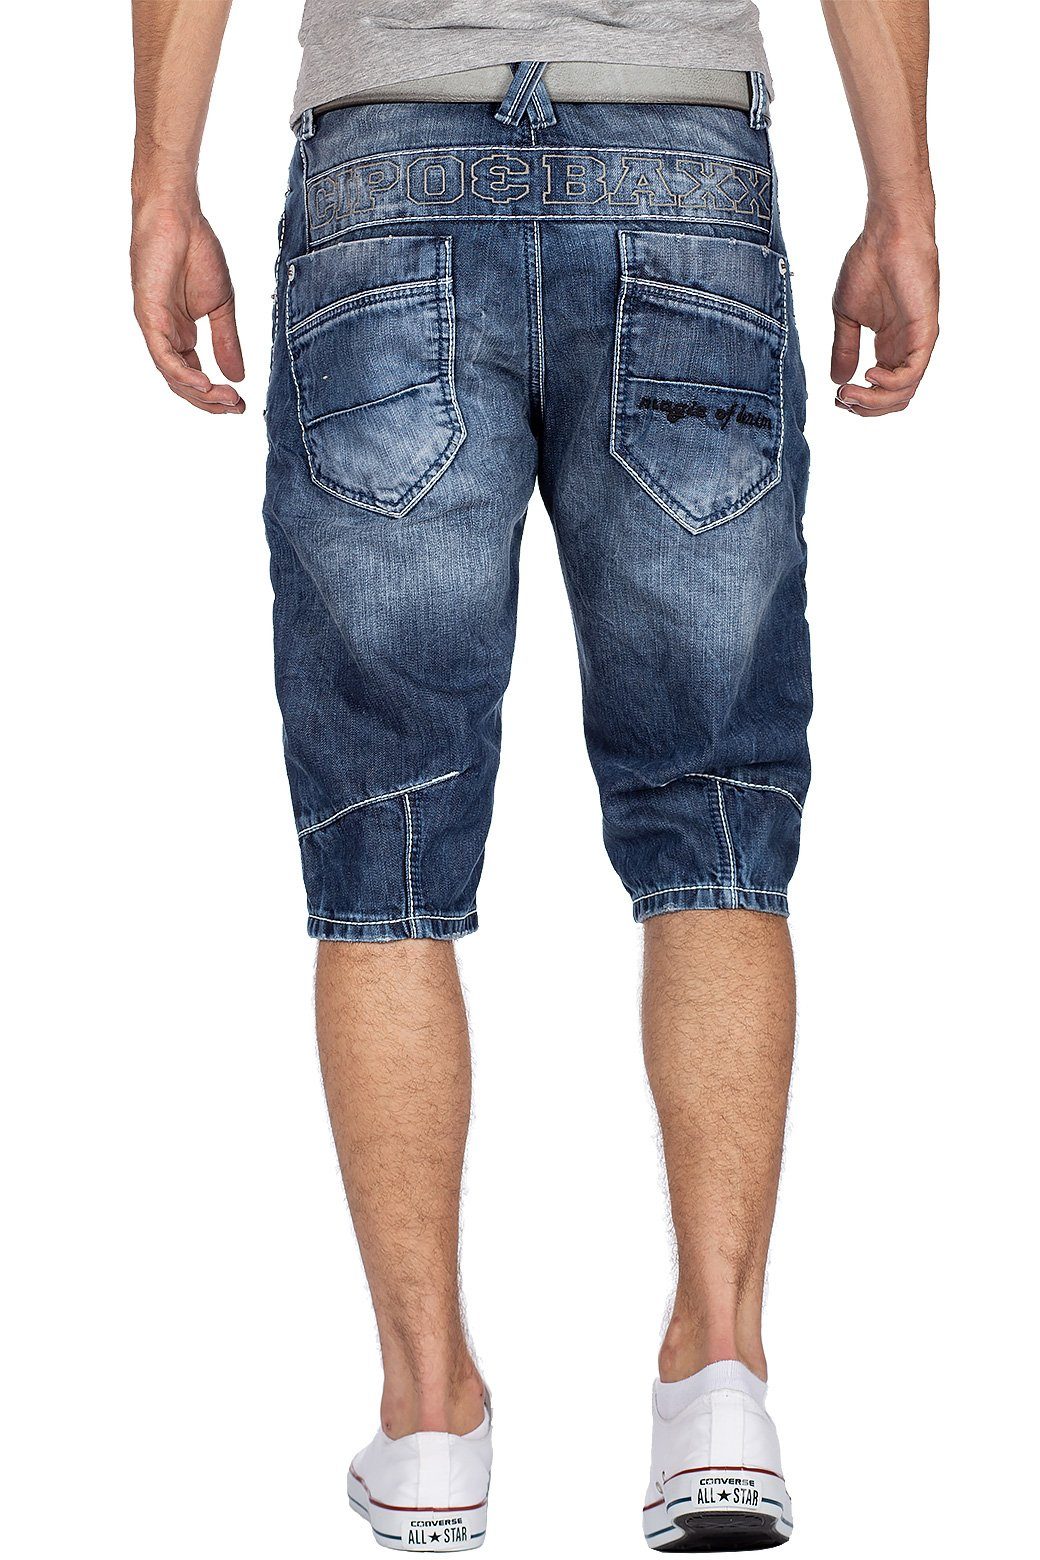 Cipo Zippern Jeansshorts mit Verzierungen BA-CK101 & Kurze Hose Baxx und